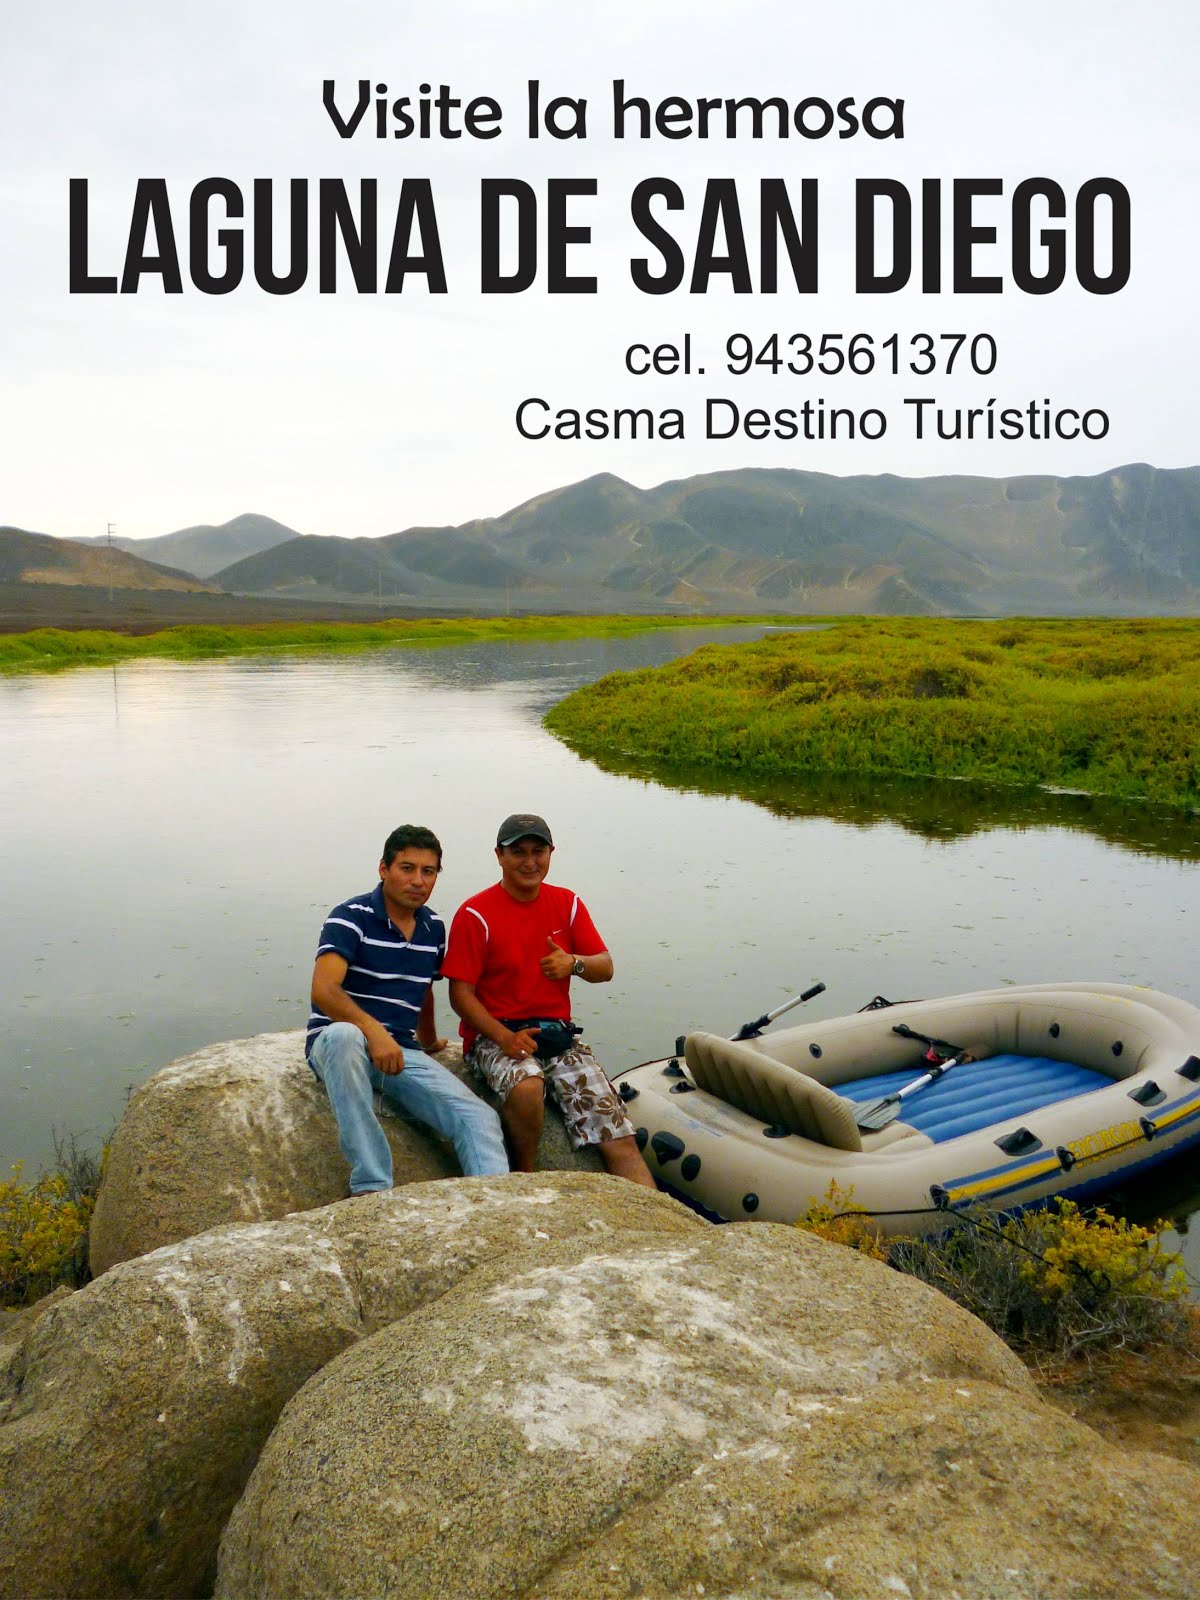 Laguna de San Diego - Casma